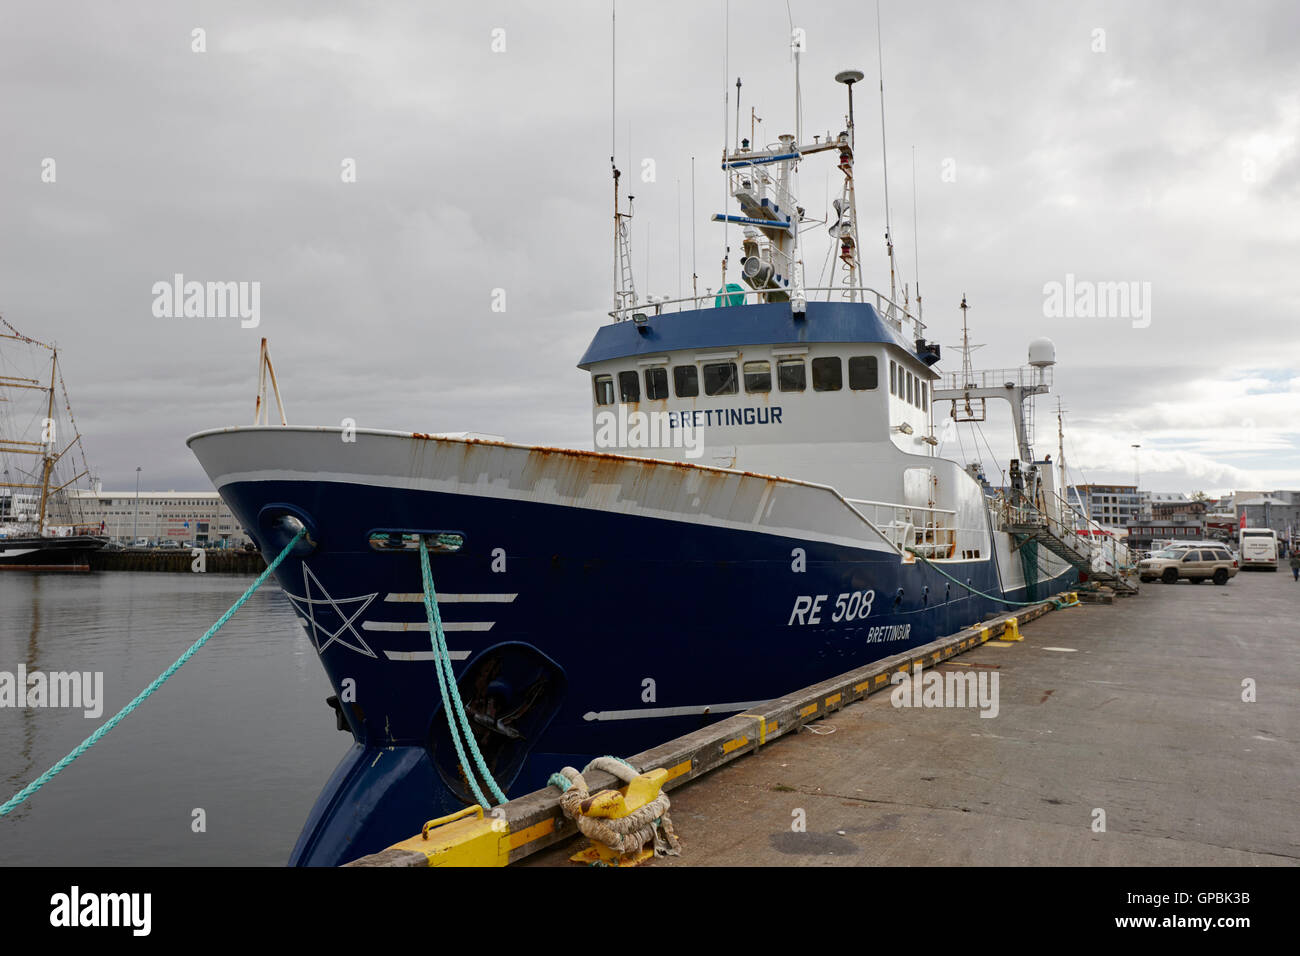 trawler brettingur berthed in reykjavik harbour Iceland Stock Photo